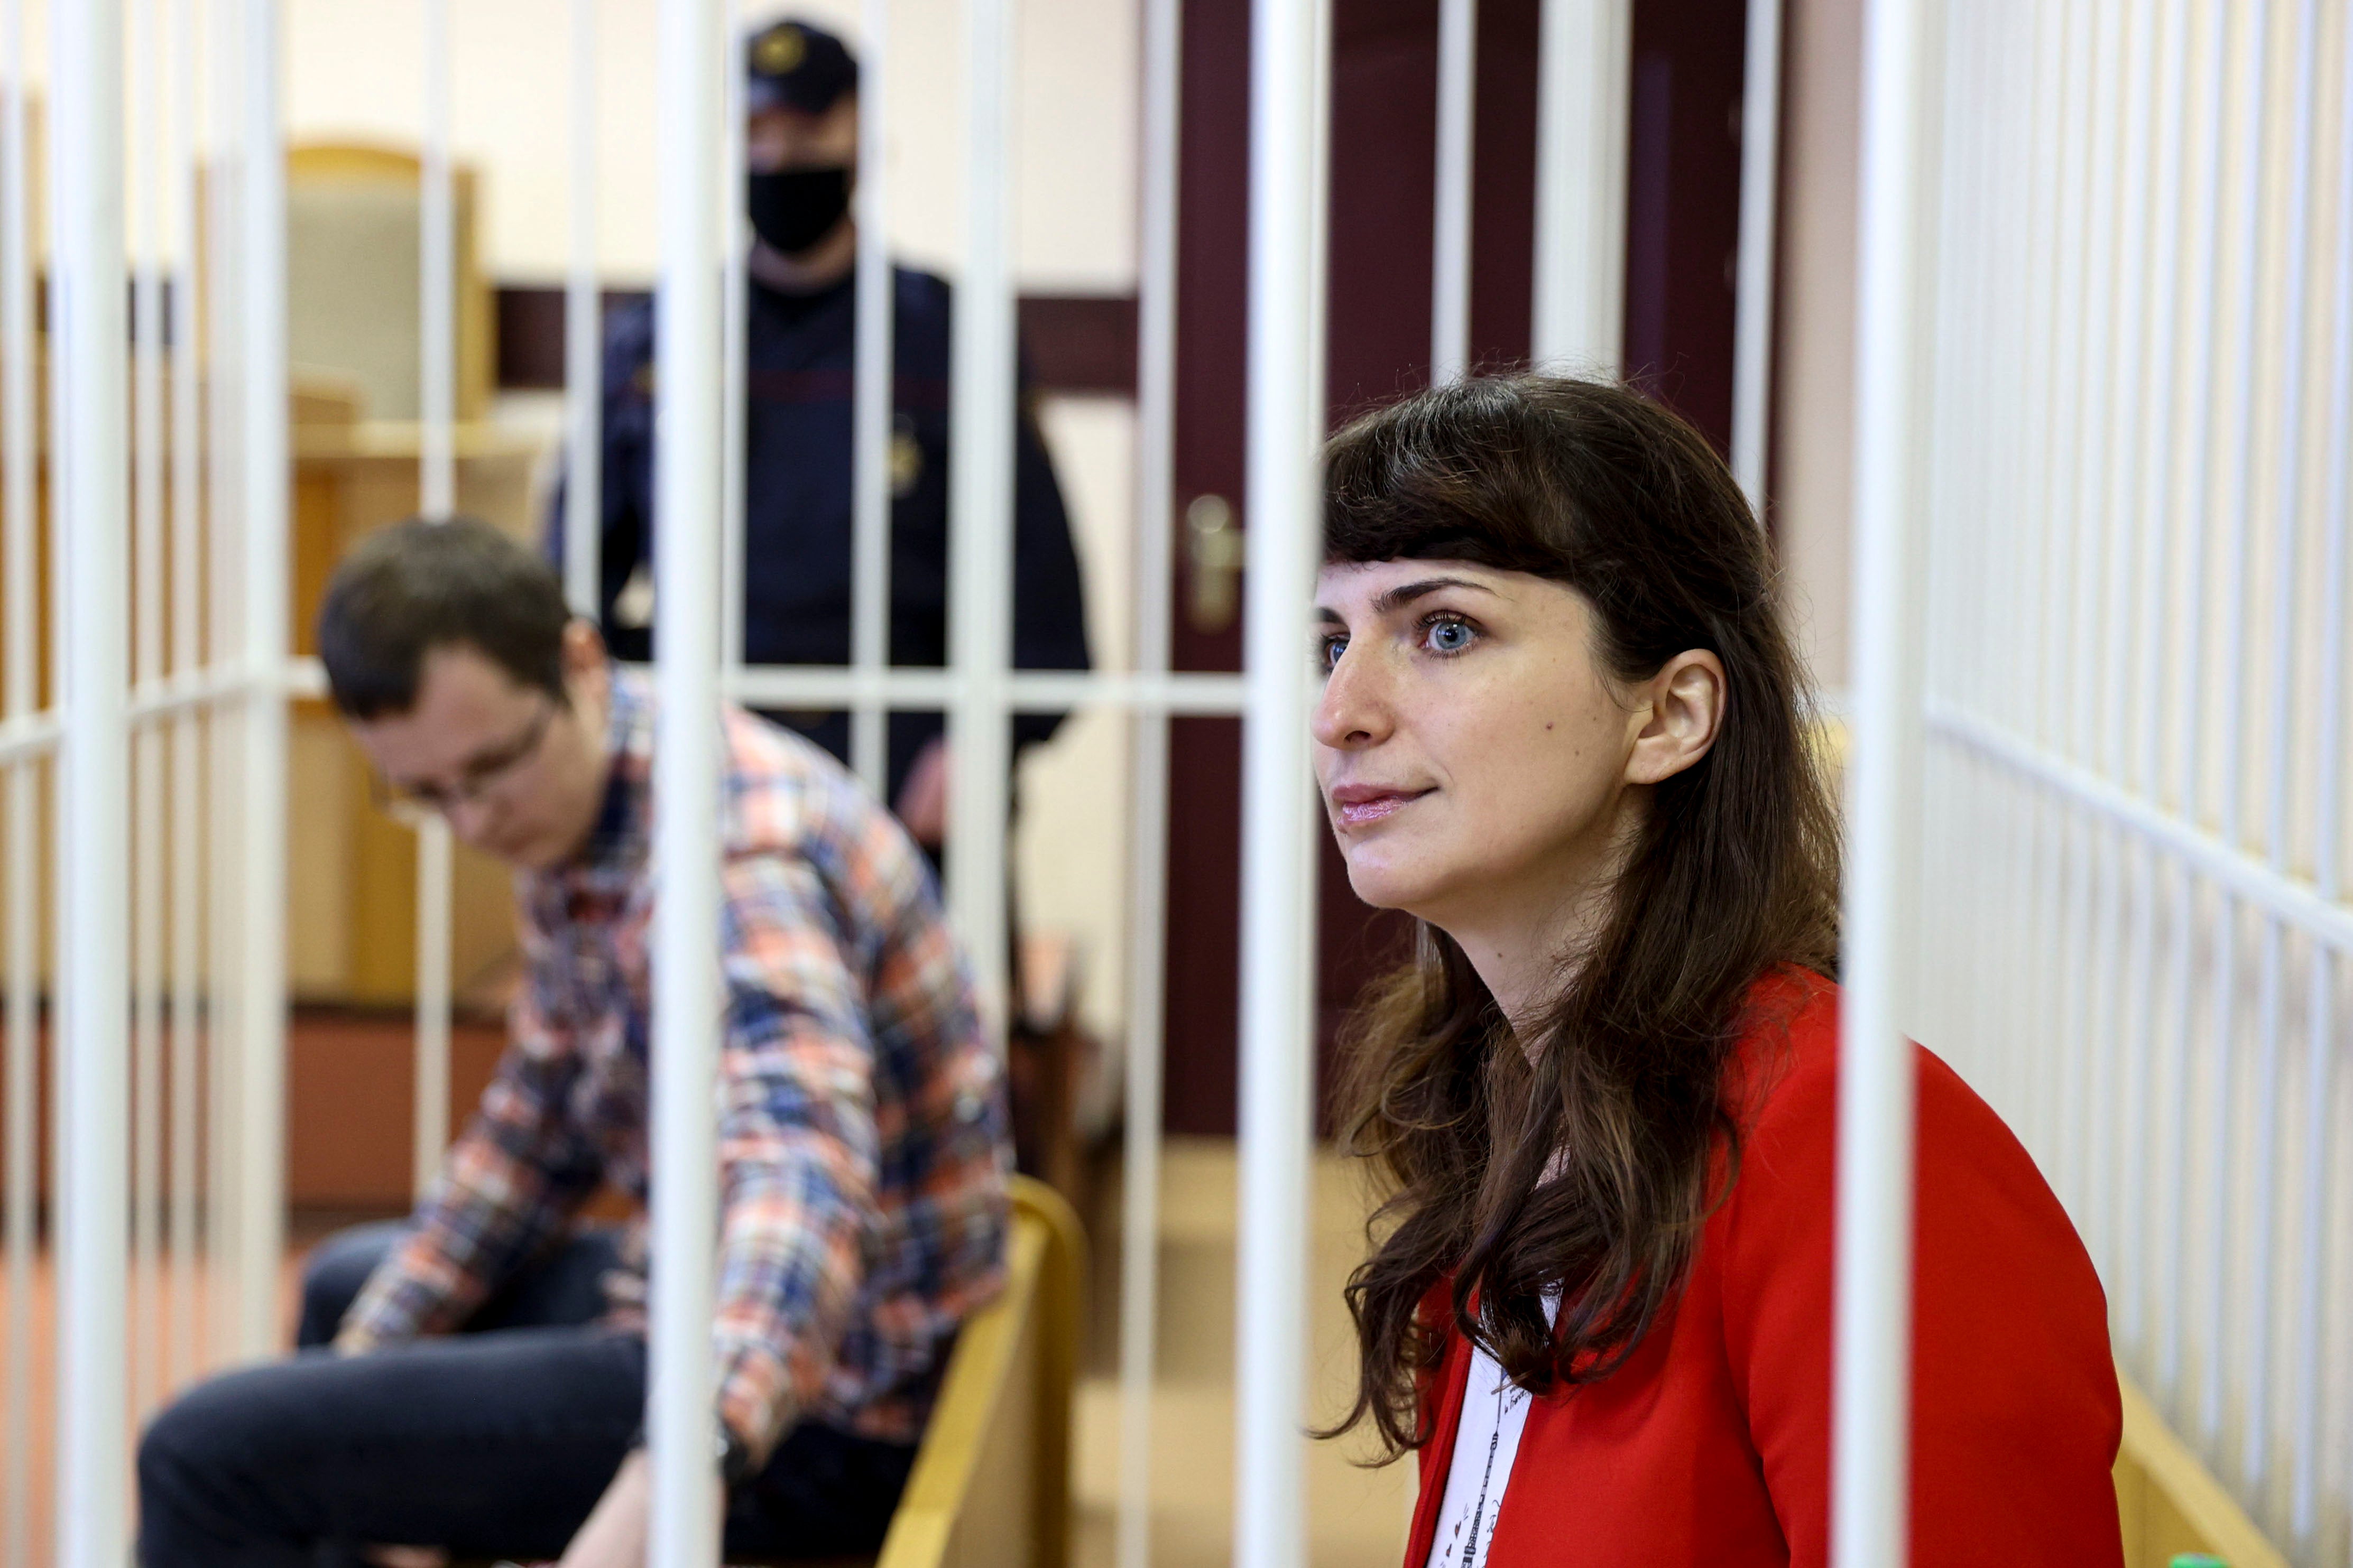 Belarusian journalist Katsiaryna Barysevich, right, and Dr. Artsiom Sorokin attend a court hearing in Minsk, Belarus, 19 February, 2021.